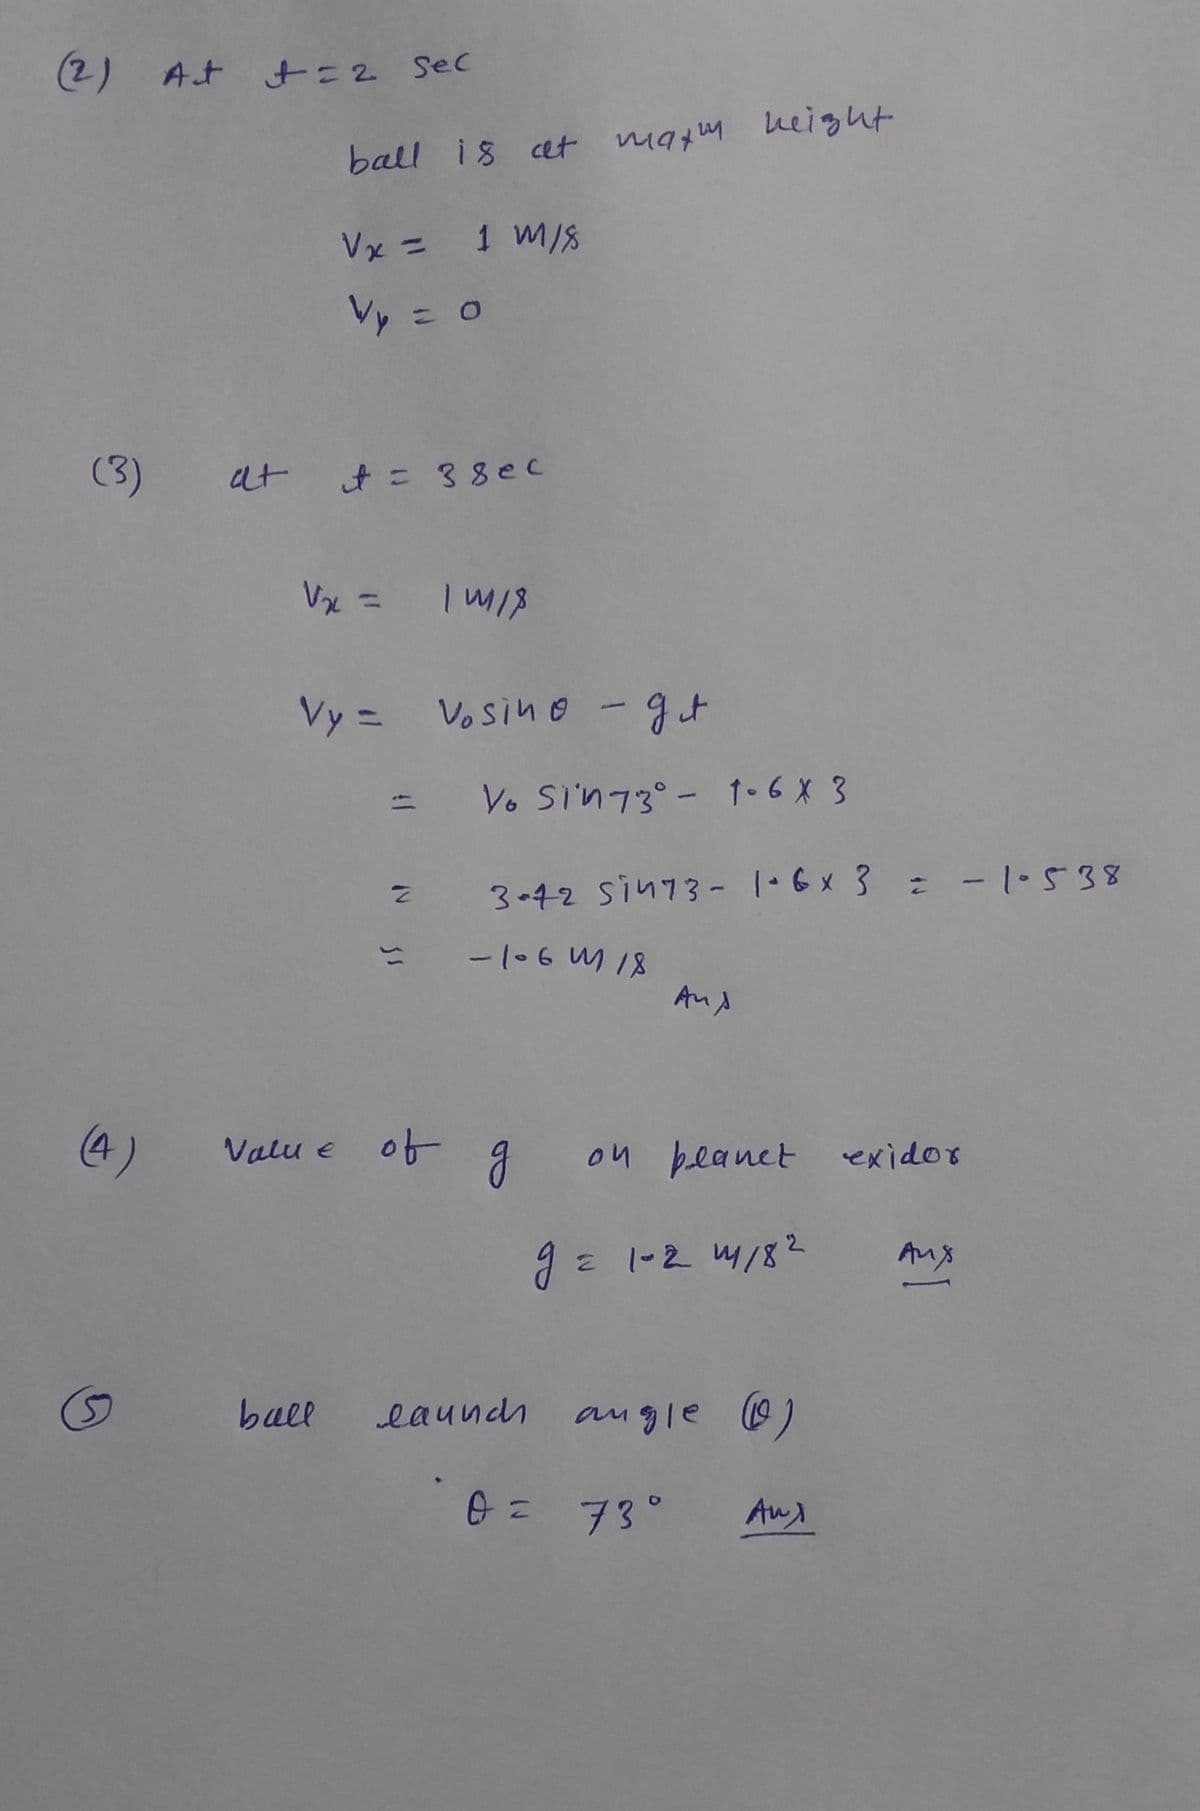 (2) At t=2 Sec
ball is cet matm Leight
Vx = 1 M/8
Vy = o
(3)
t= 38ec
Vx =
Vy = Vosino -gt
Vo Si'n73°- 1-6 X 3
3-42 sin73- 1·6x 3 -1.538
-106 M 18
Aud
(4)
Valu e of
on beanet exidor
J= 1-2 4/8?
Ans
5)
ball
eaundh agle 0)
73°
Au
